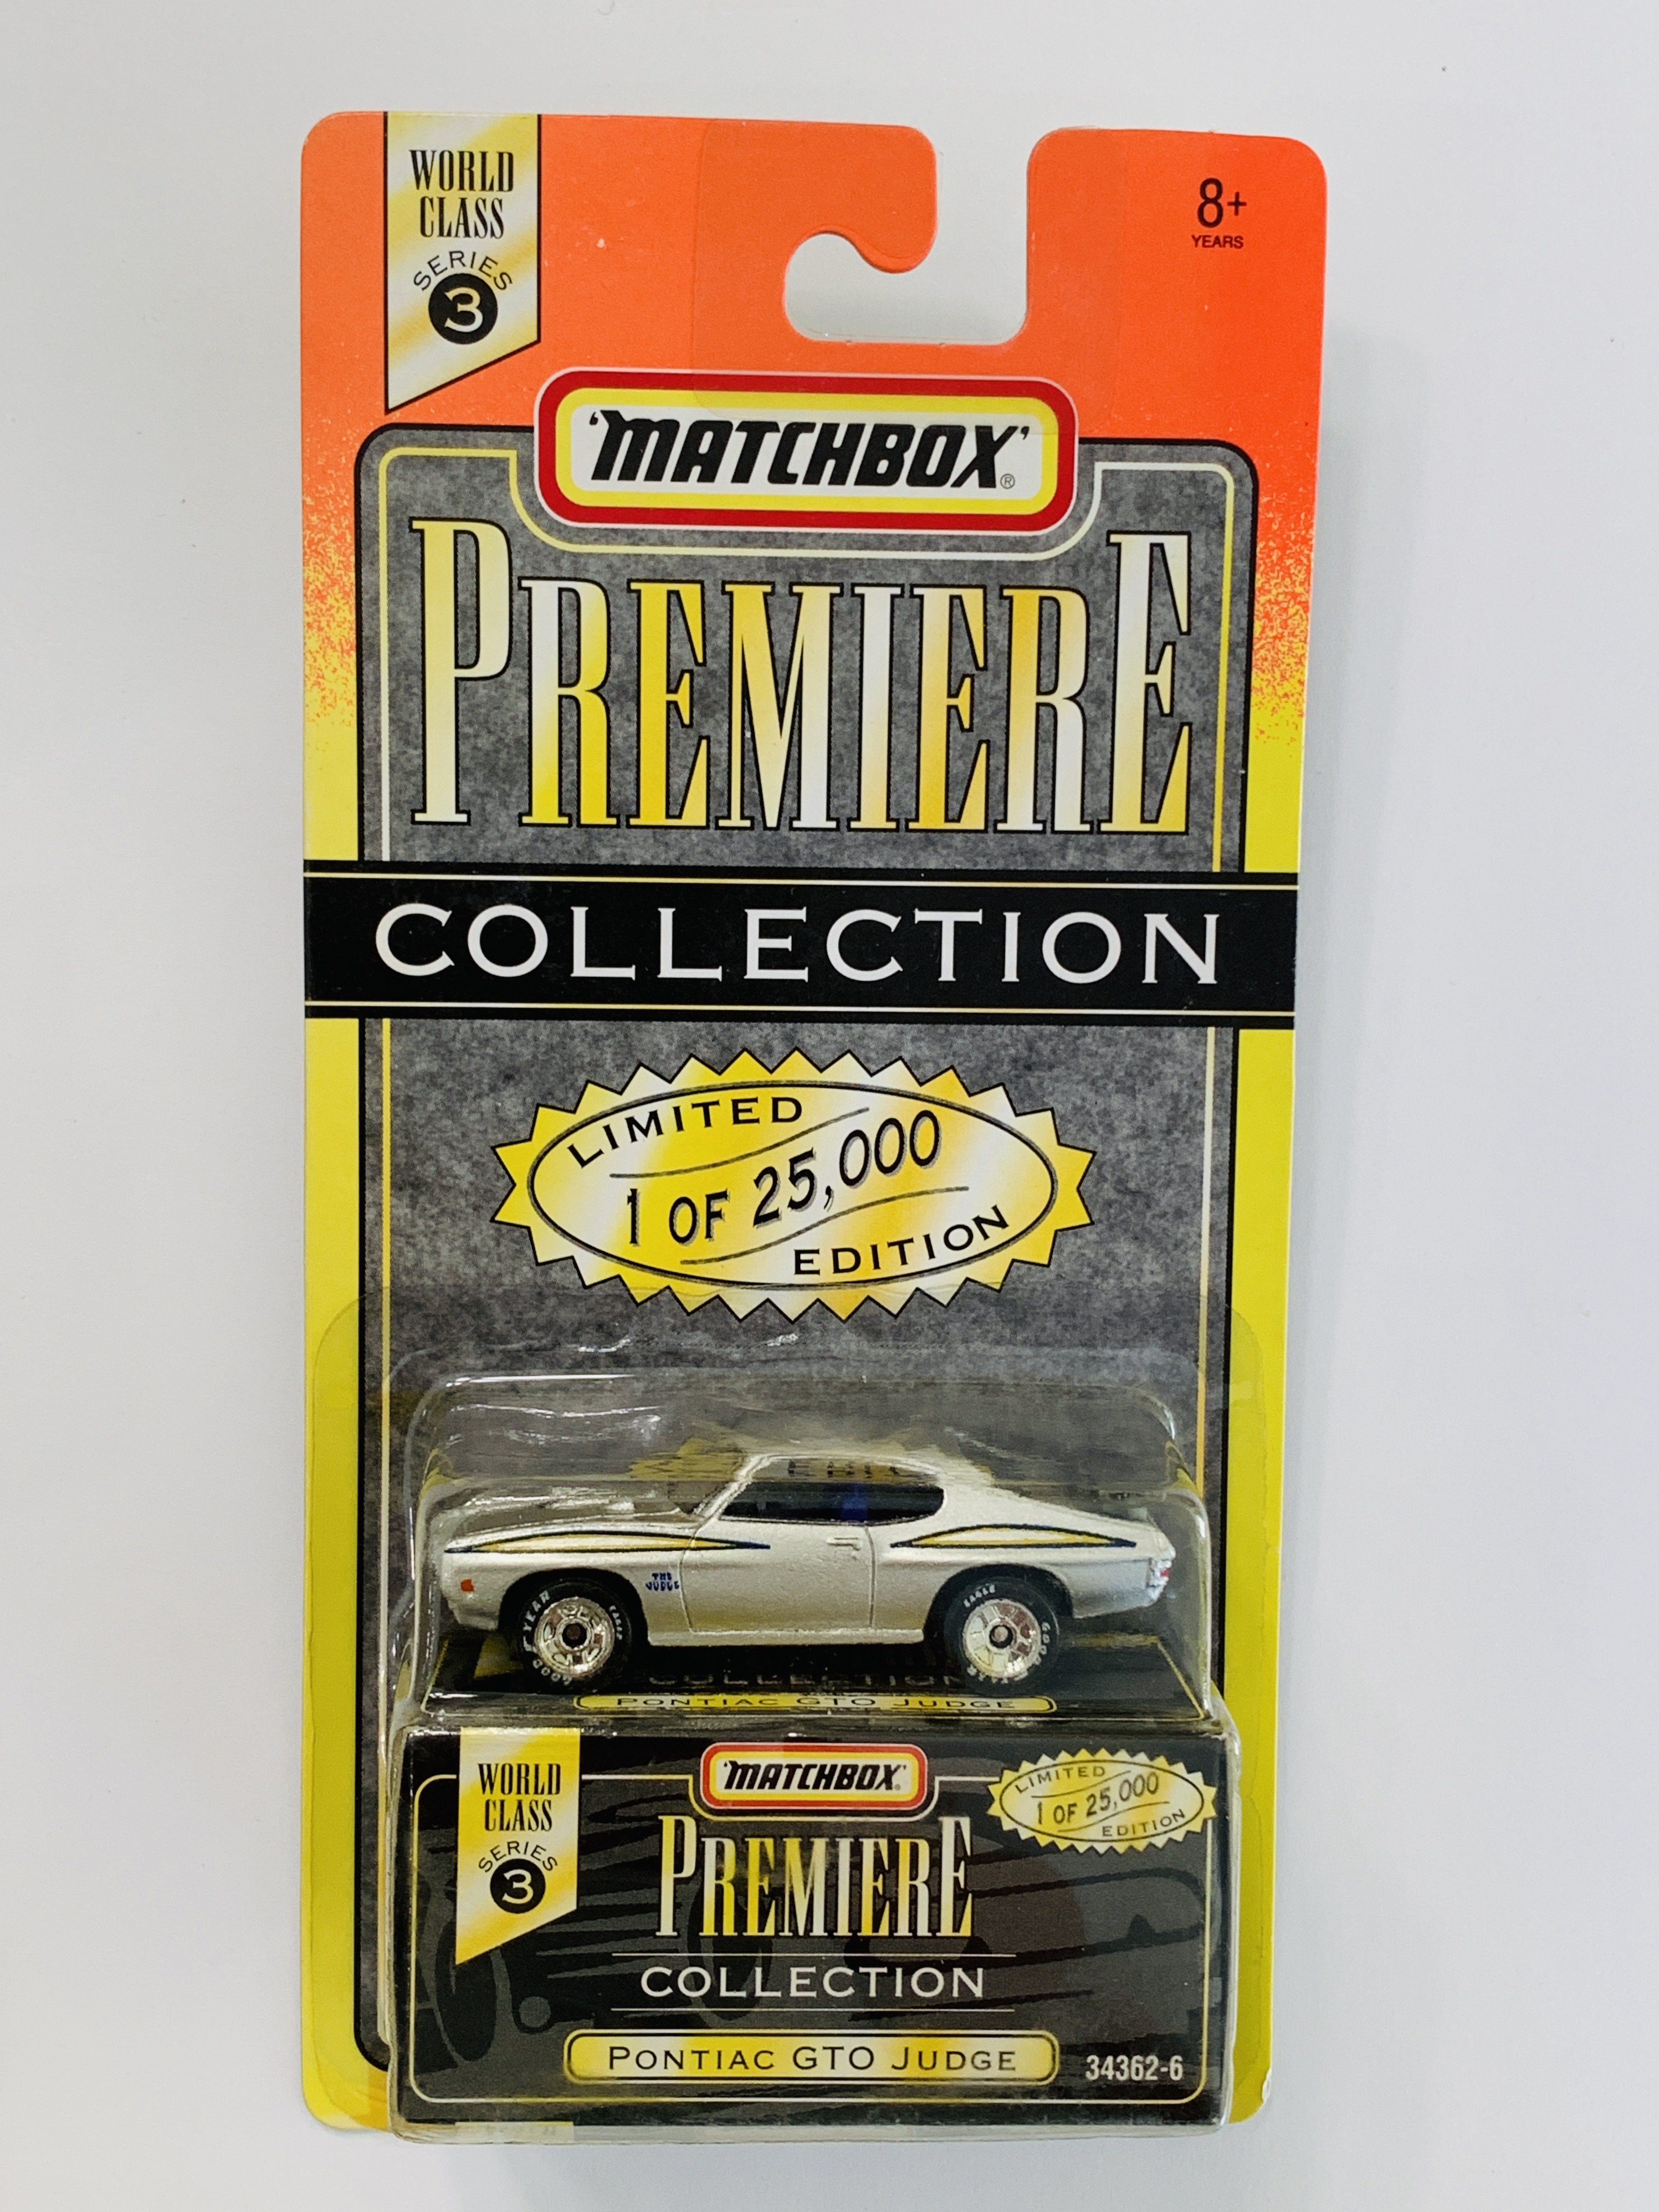 Matchbox Premiere World Class Series 3 Pontiac GTO Judge